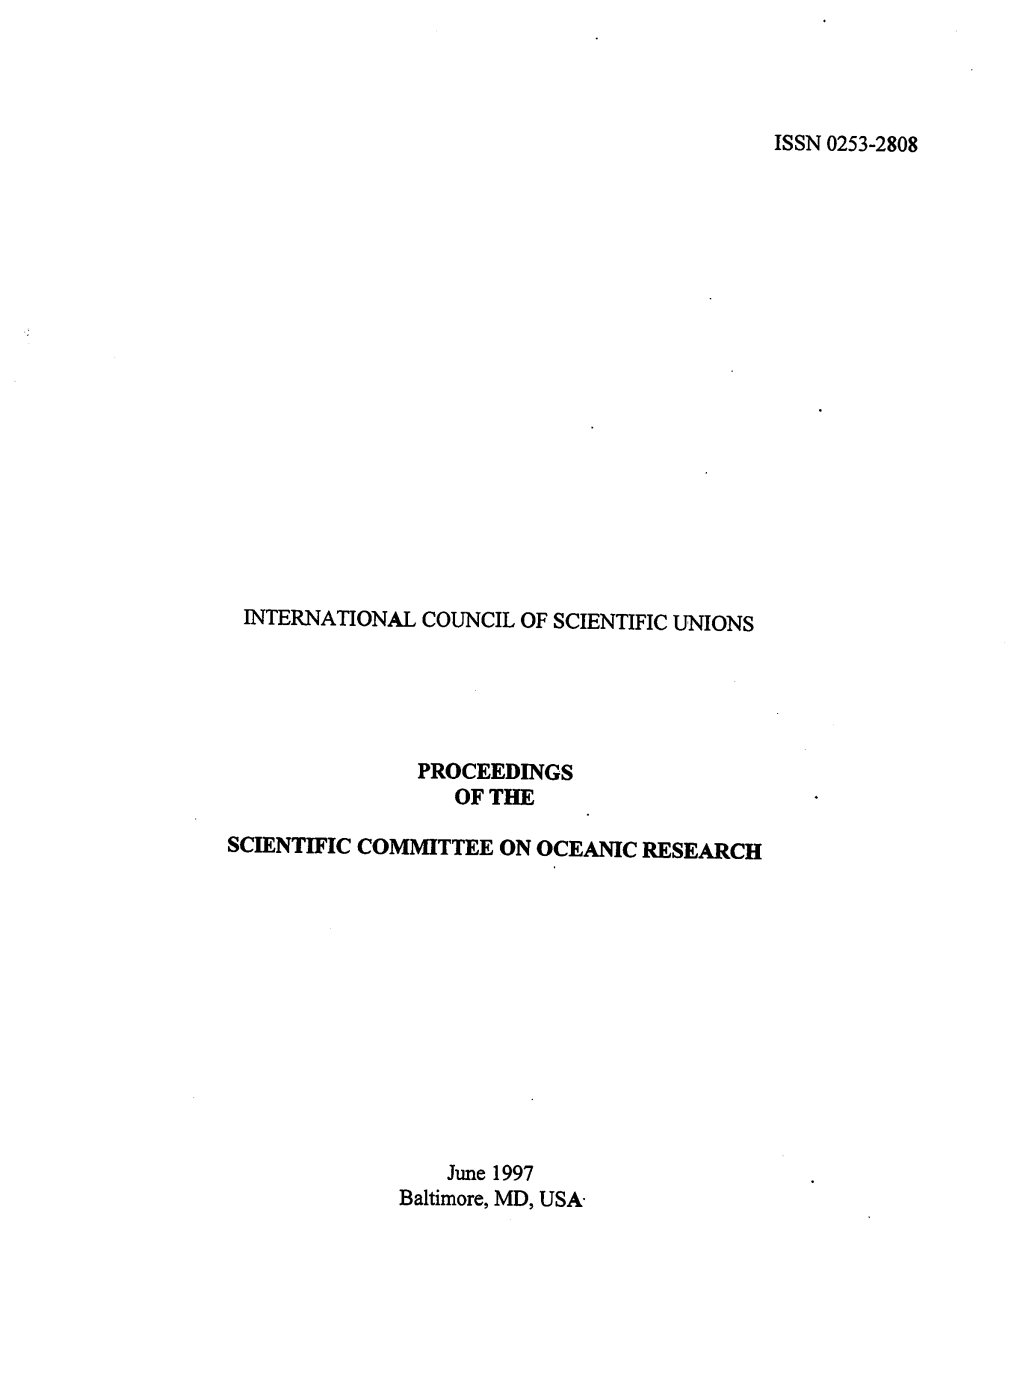 Proceedings of the Scientific Committee on Oceanic